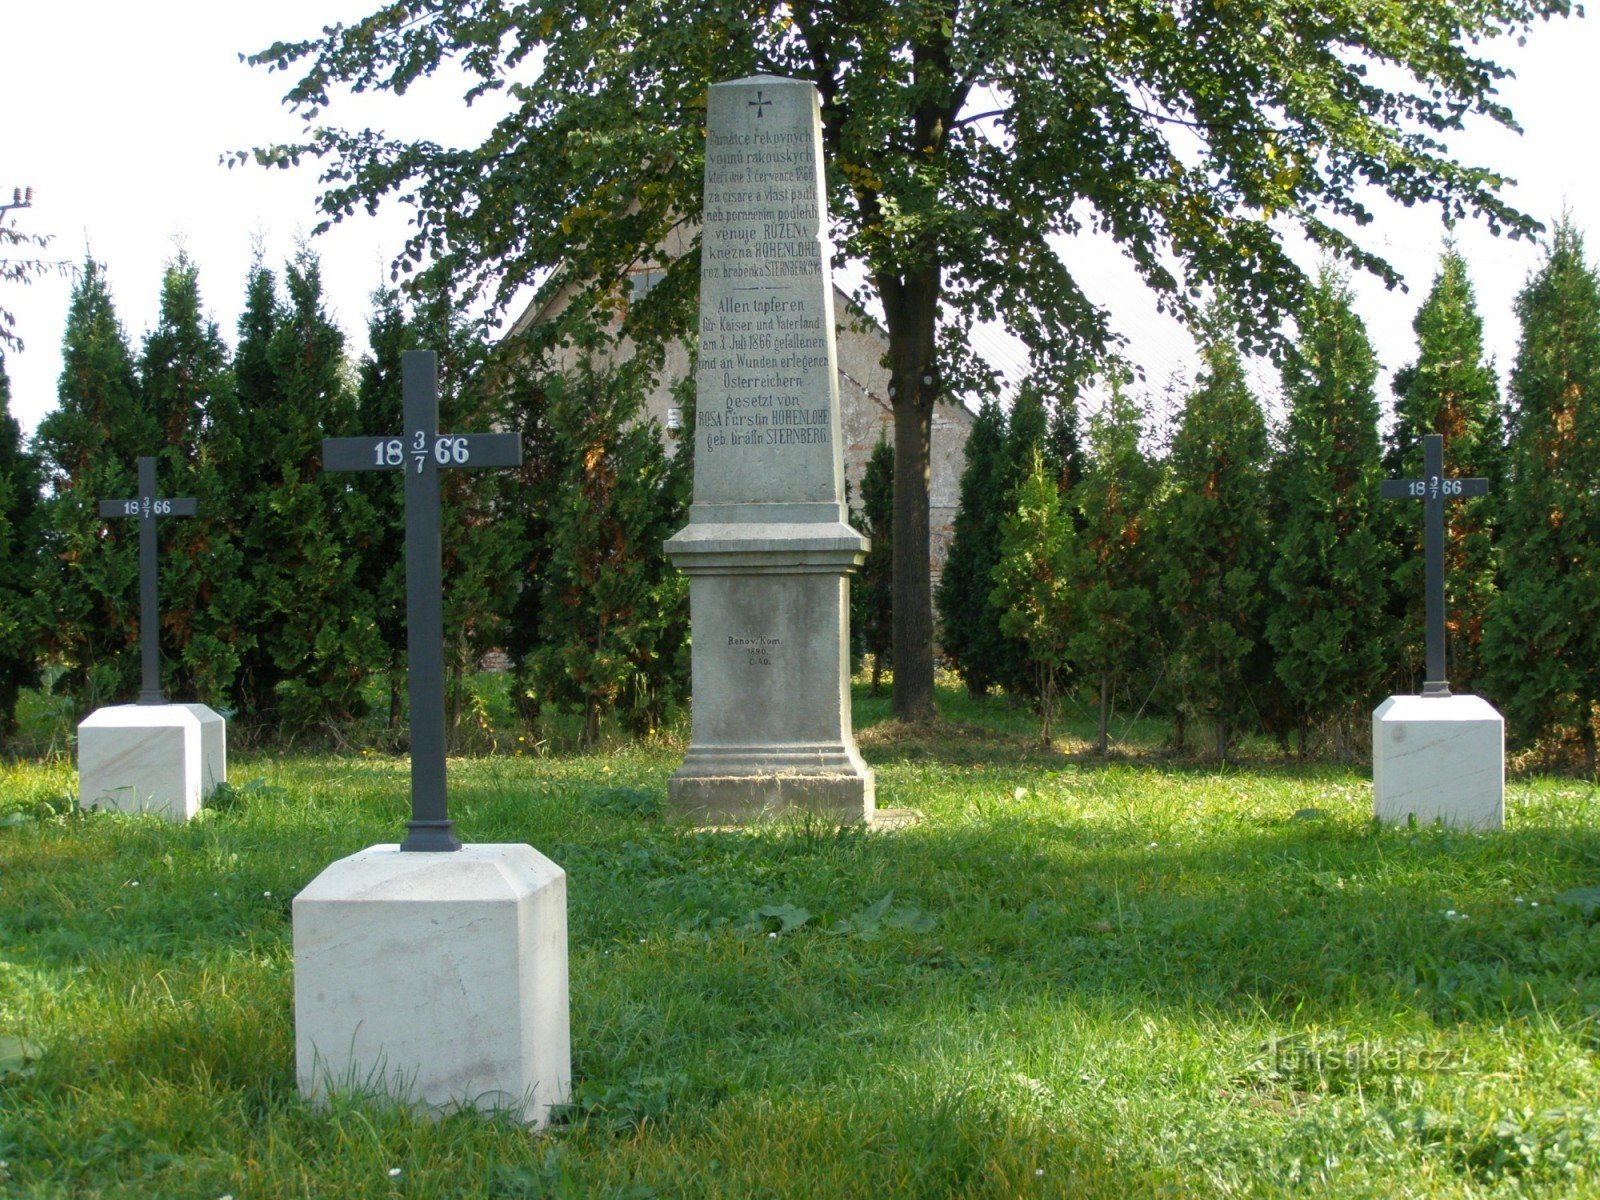 Nedelíště - slagets militærkirkegård i 1866